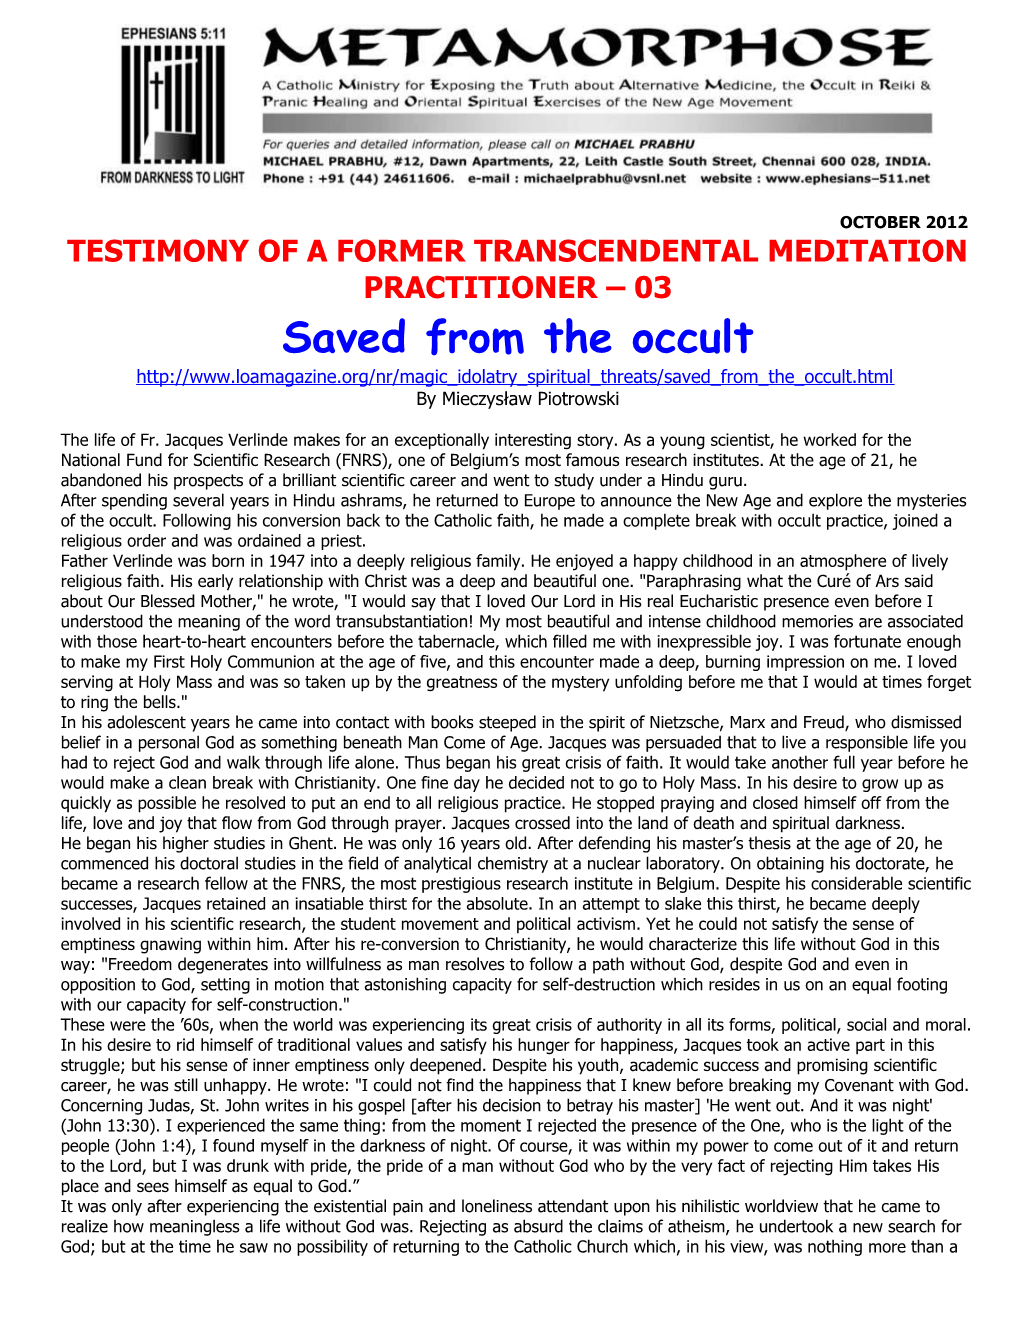 Testimony of a Former Transcendental Meditation Practitioner 03